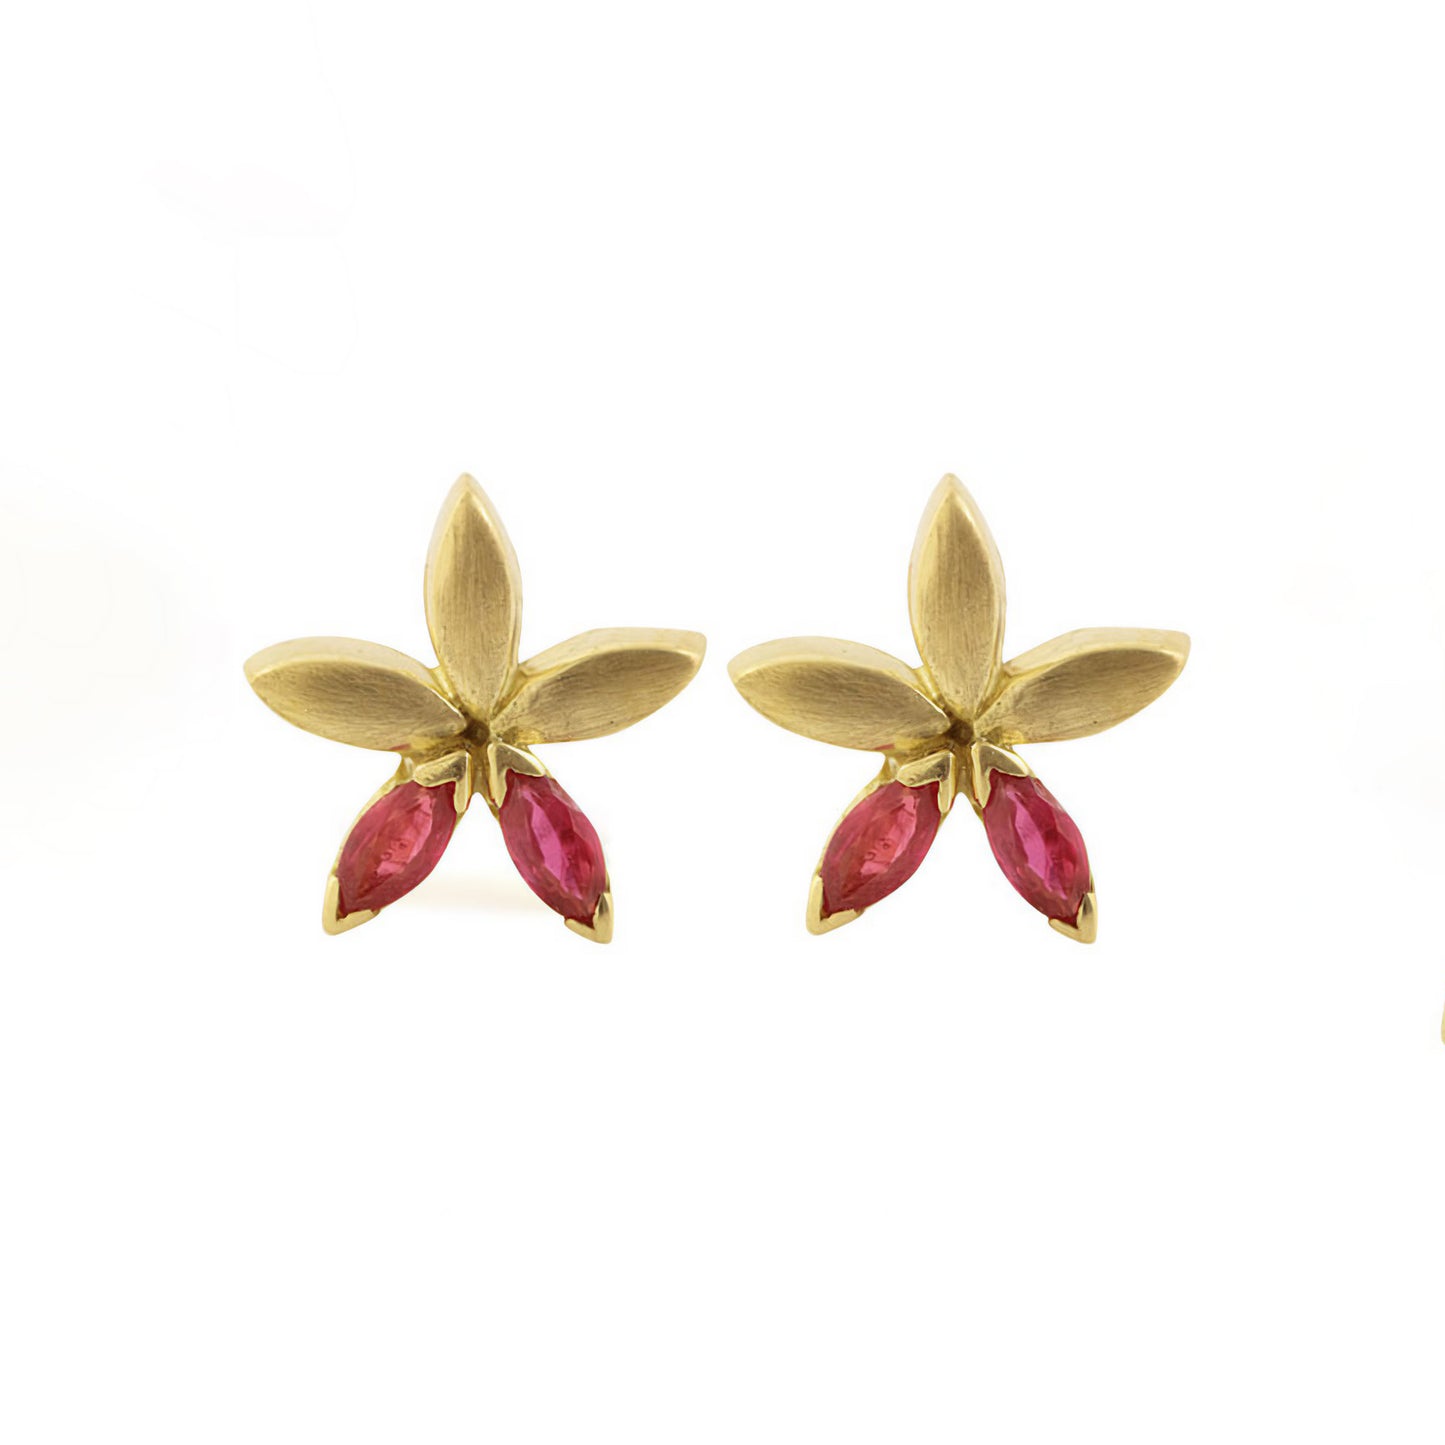 The Babyrasa Simran Petal Gold and Ruby Ear Studs by Rasvihar